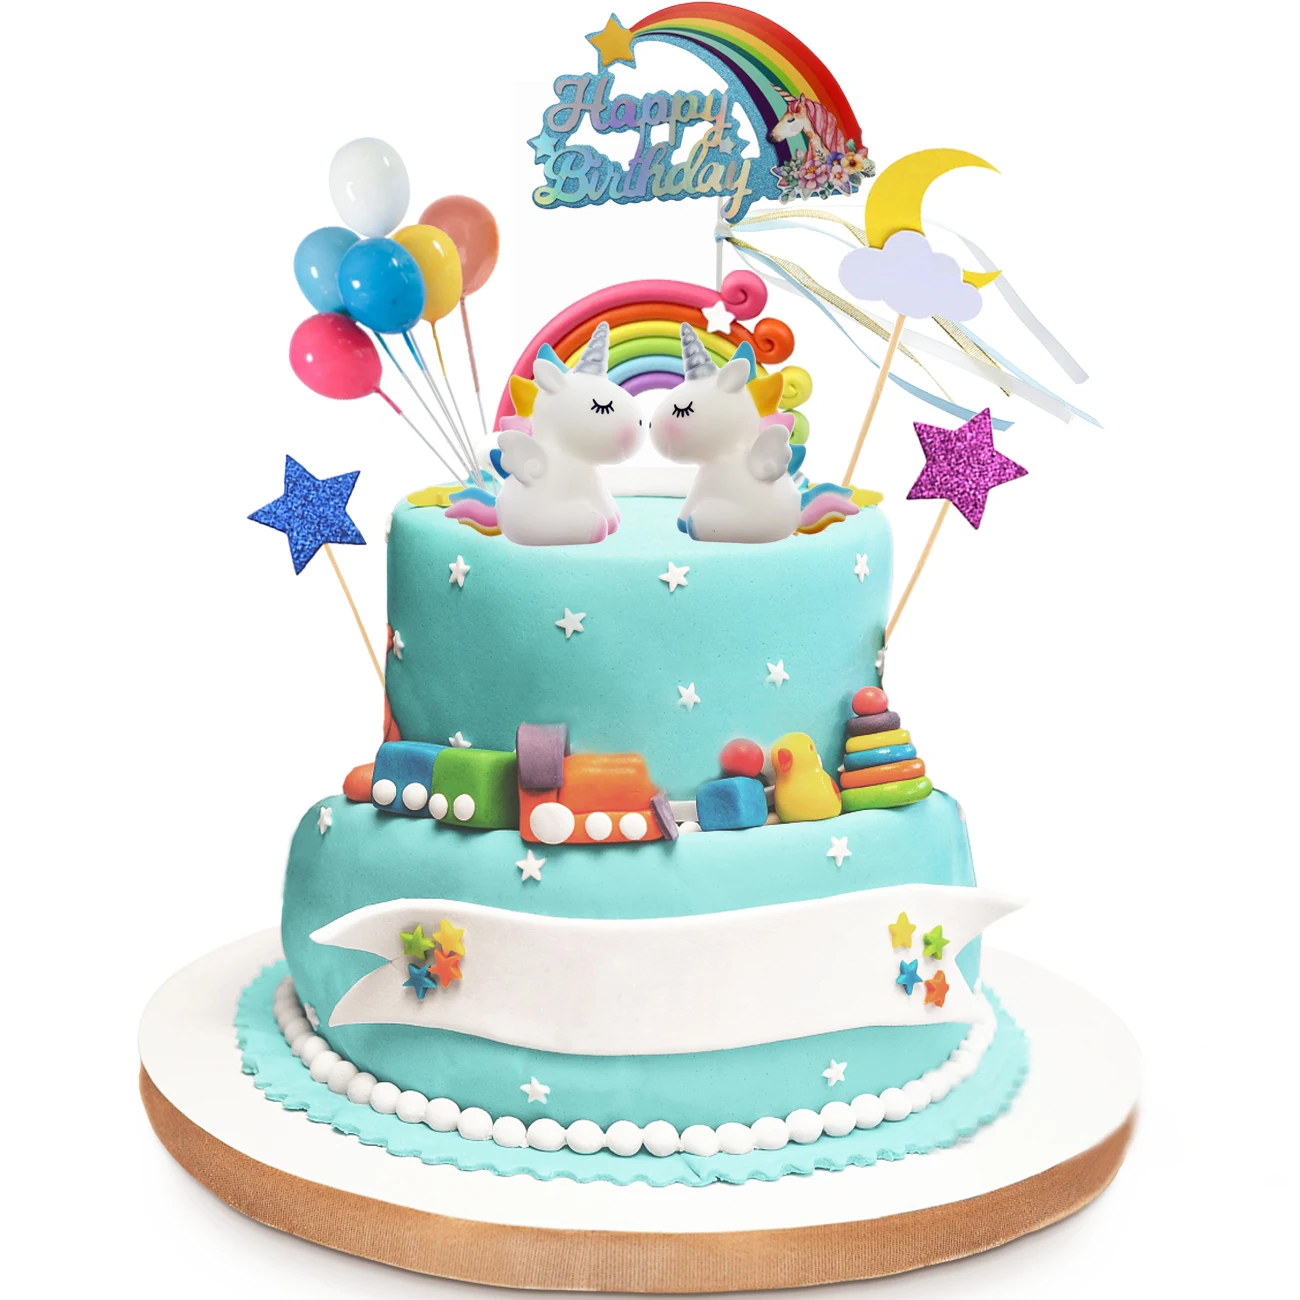 3pcs Colorful Rainbow Ballon Cake Topper Birthday unicorn Cake decorate NEW 2019 